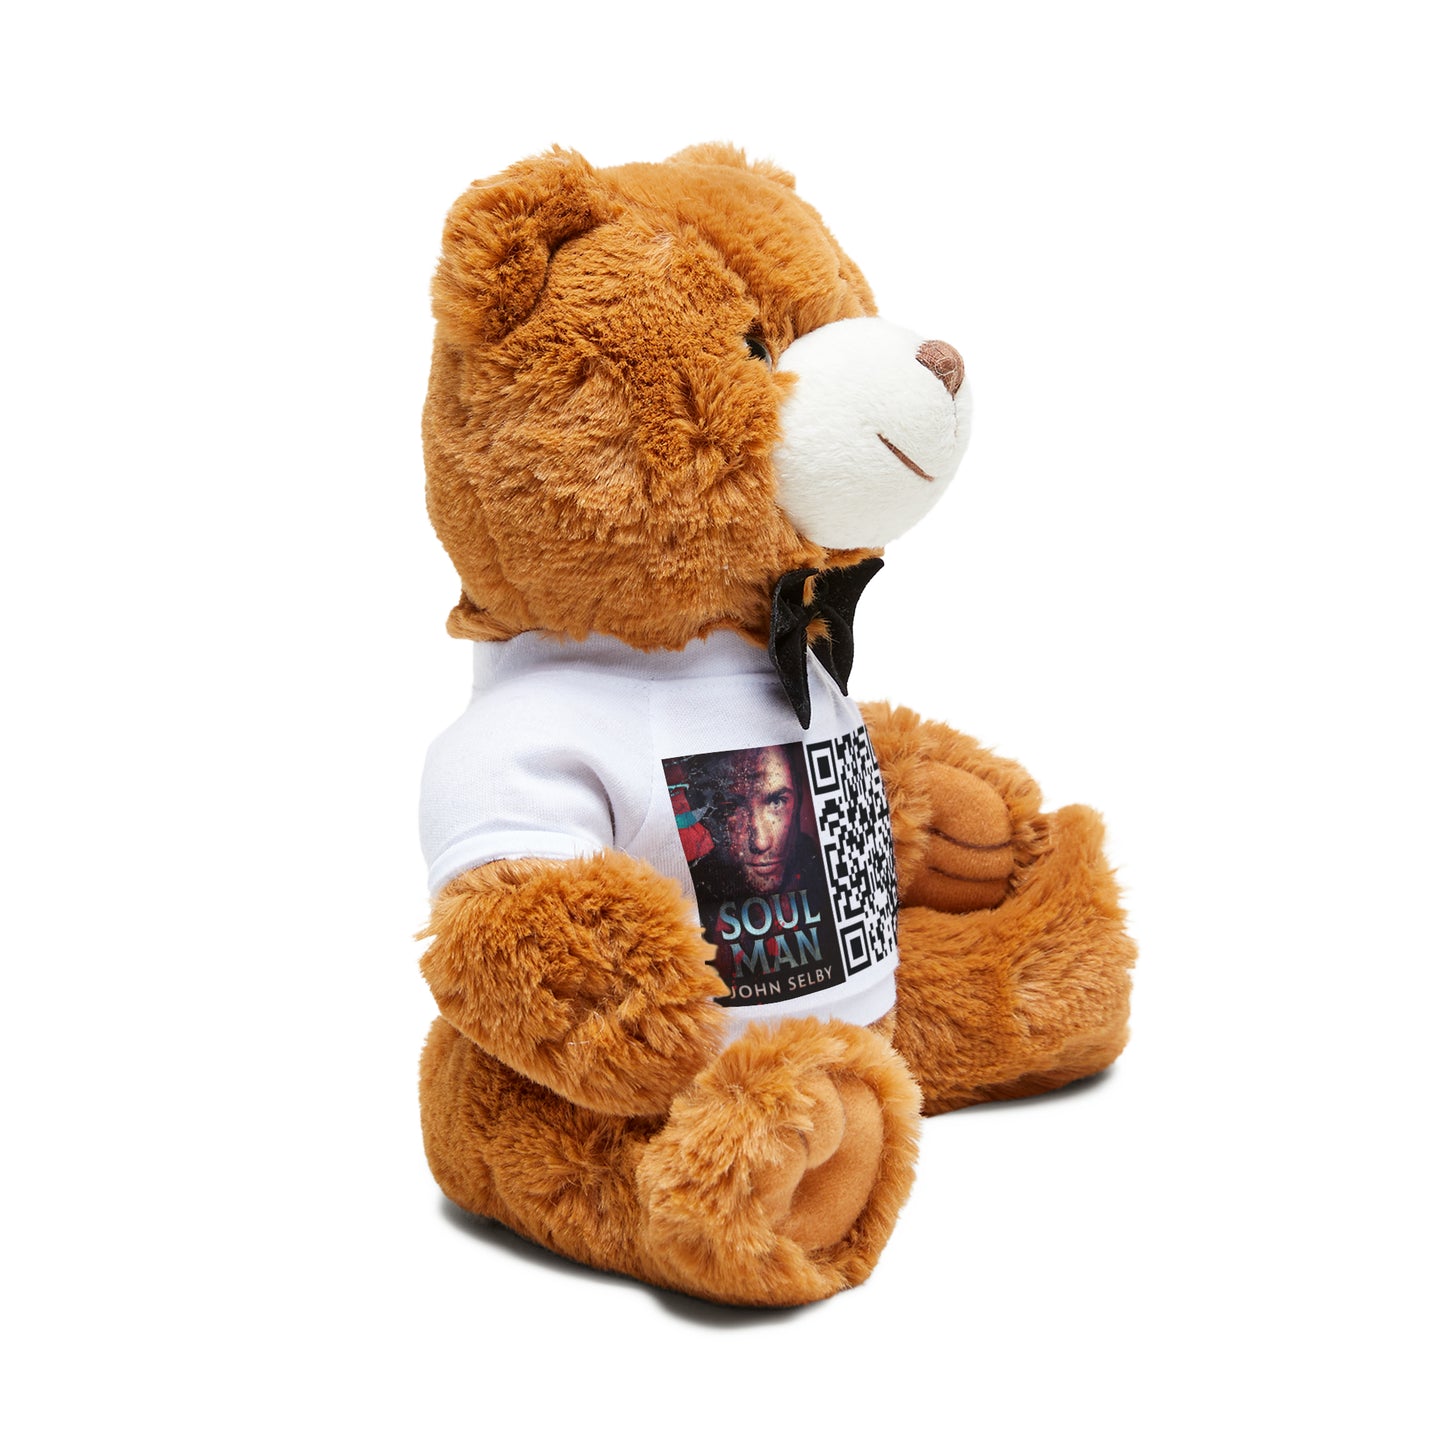 Soul Man - Teddy Bear